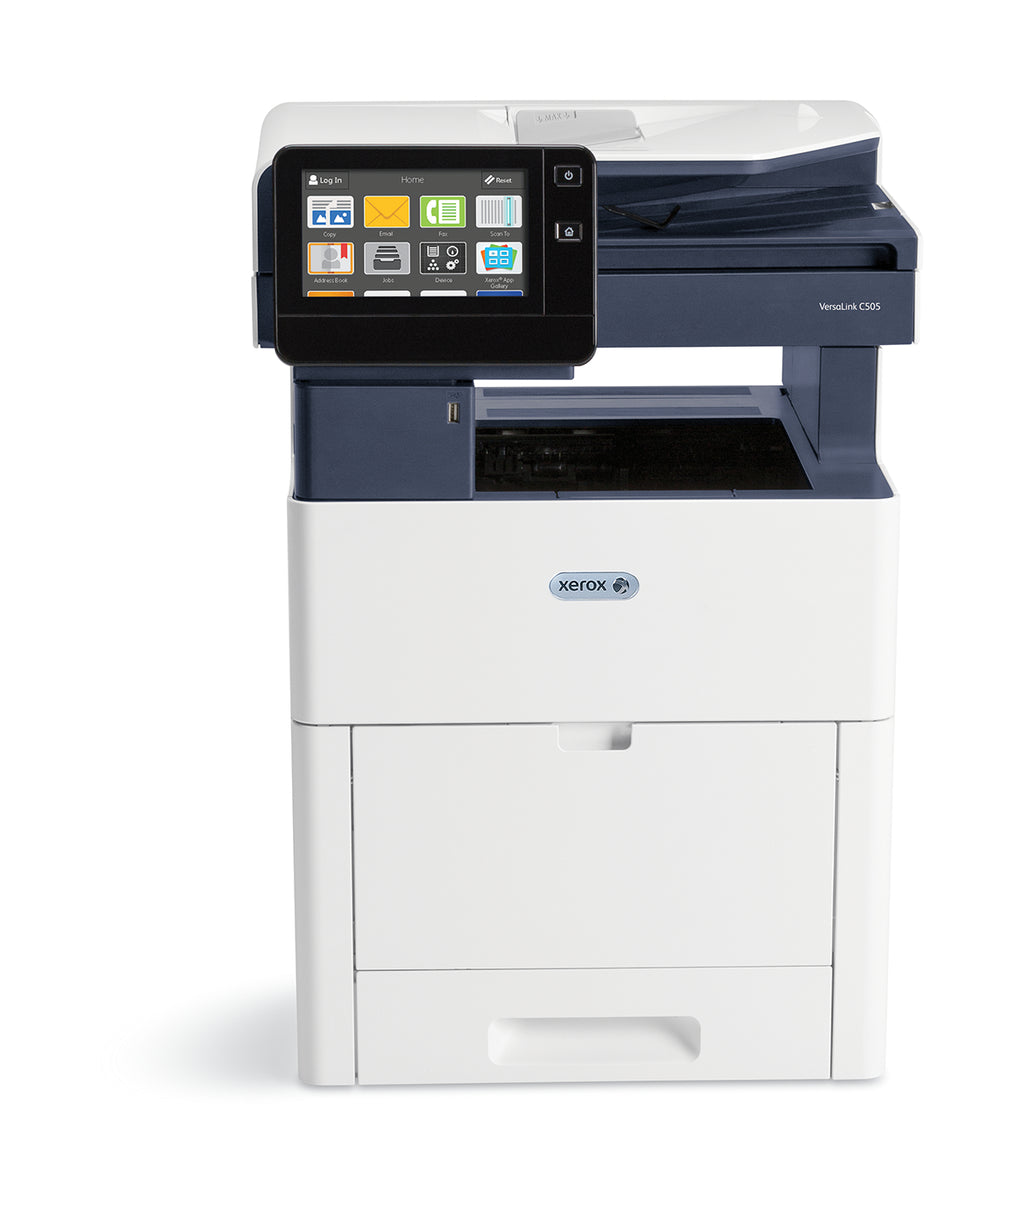 Xerox Versalink C505 43 PPM A4 Color Multi Function Printer